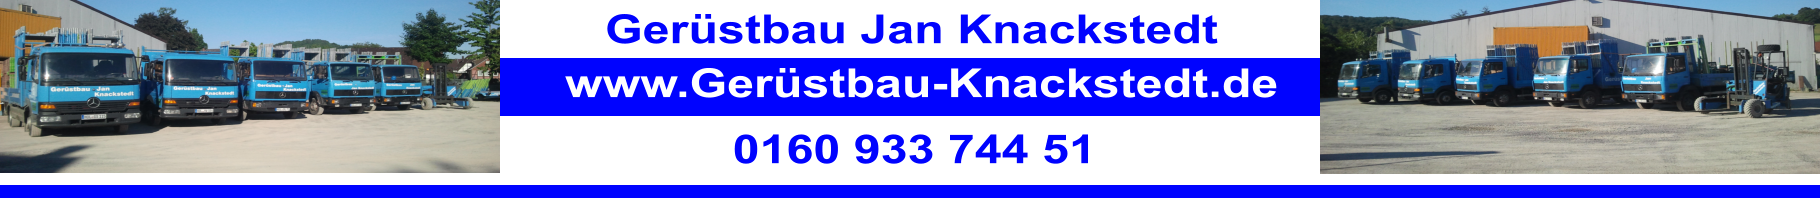 Gerstbau Jan Knackstedt www.Gerstbau-Knackstedt.de 0160 933 744 51